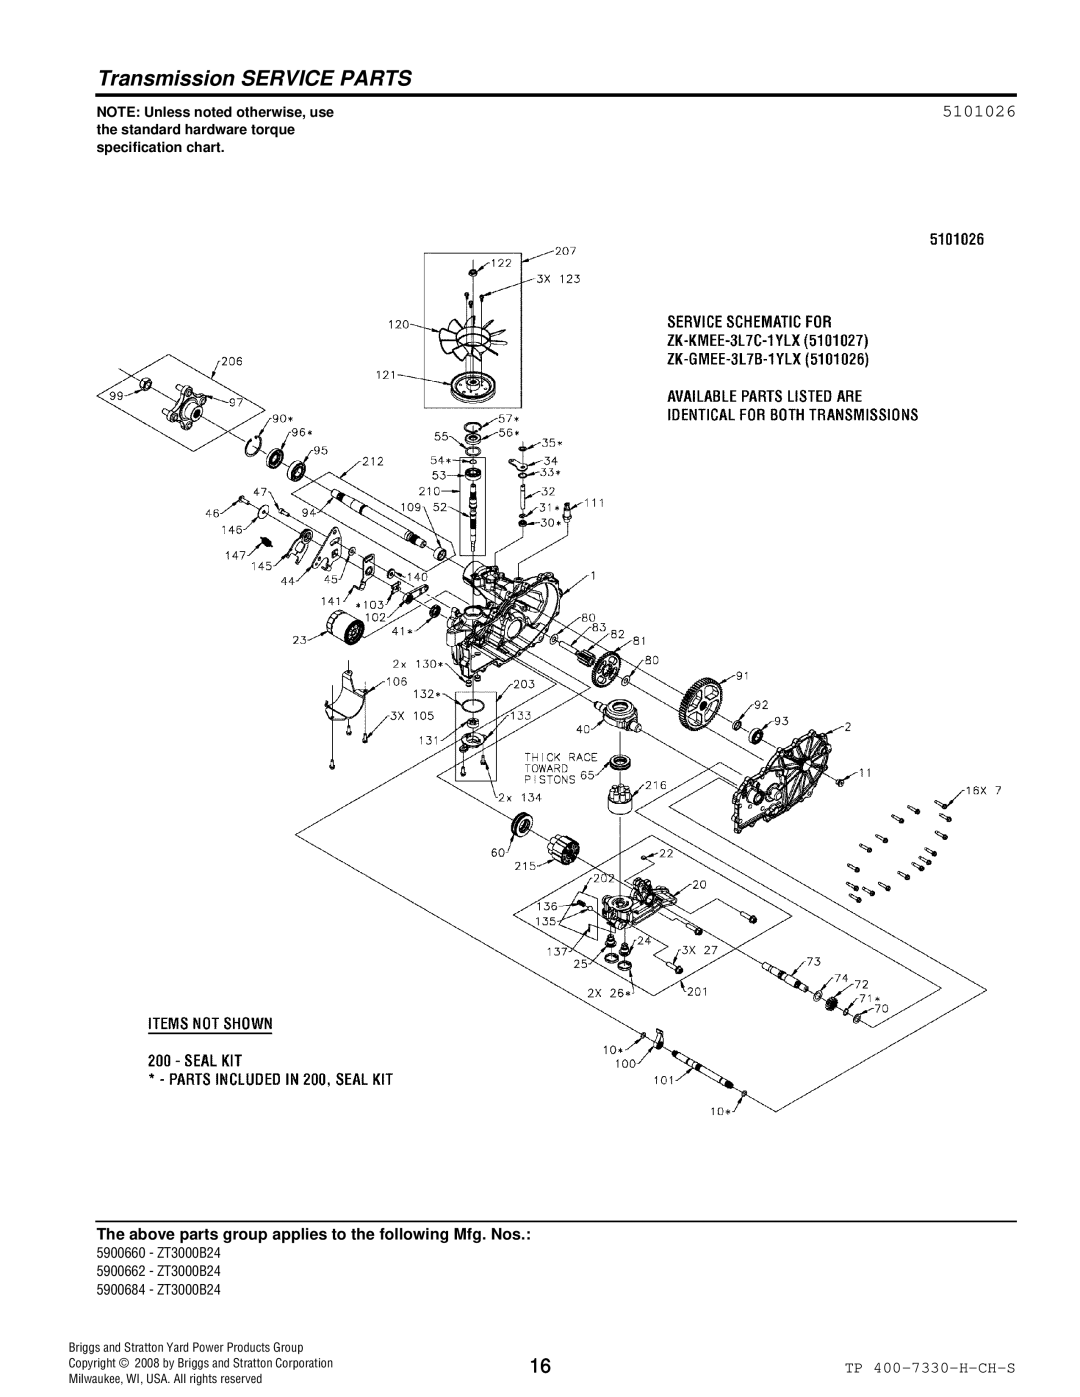 Simplicity ZT3000 manual Transmission Service Parts, 5101026 